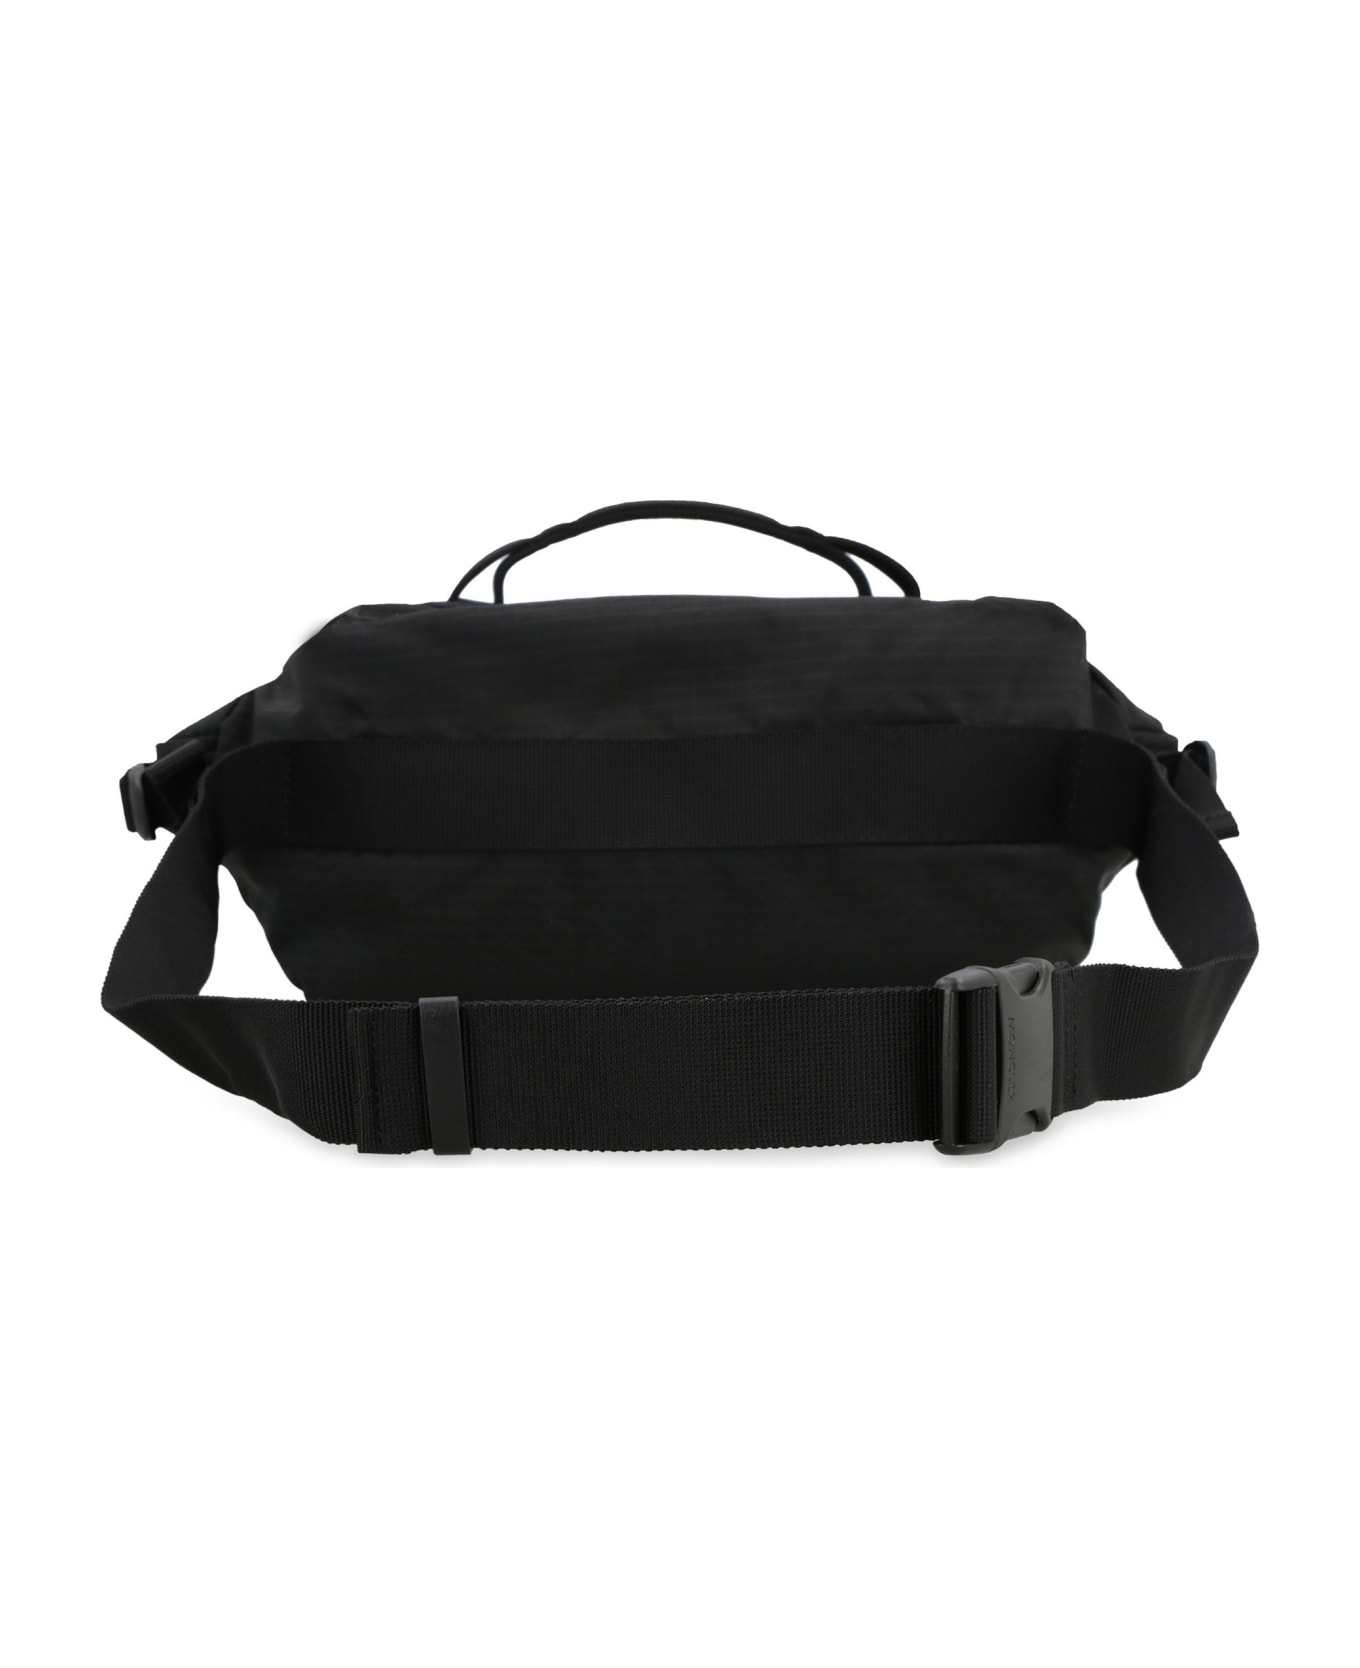 Moncler Alchemy Technical Fabric Belt Bag - black トラベルバッグ